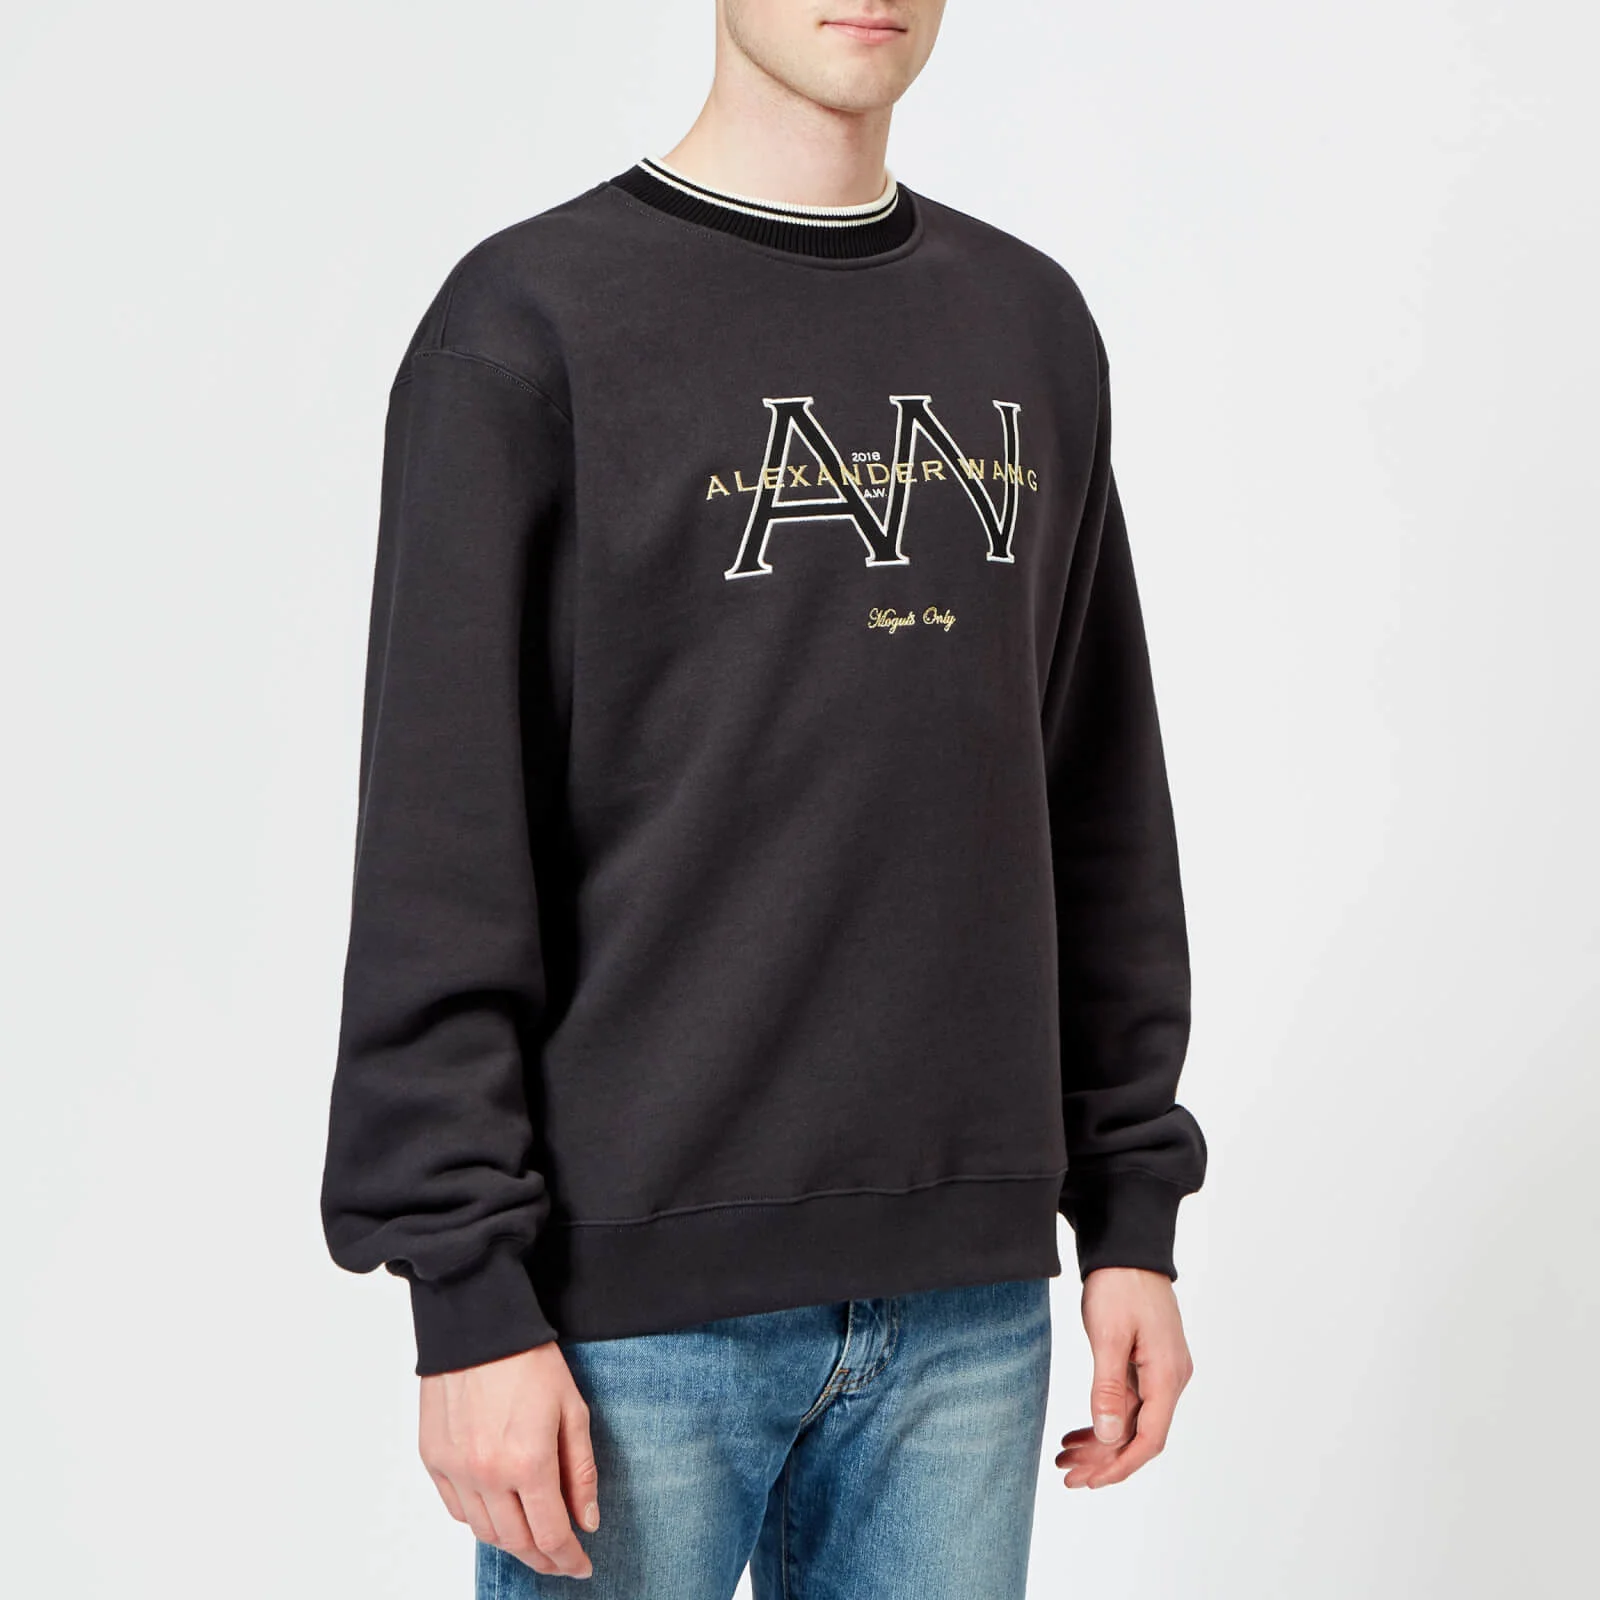 Alexander Wang Men's Withhaw Monogram Sweatshirt - Faded Black Image 1